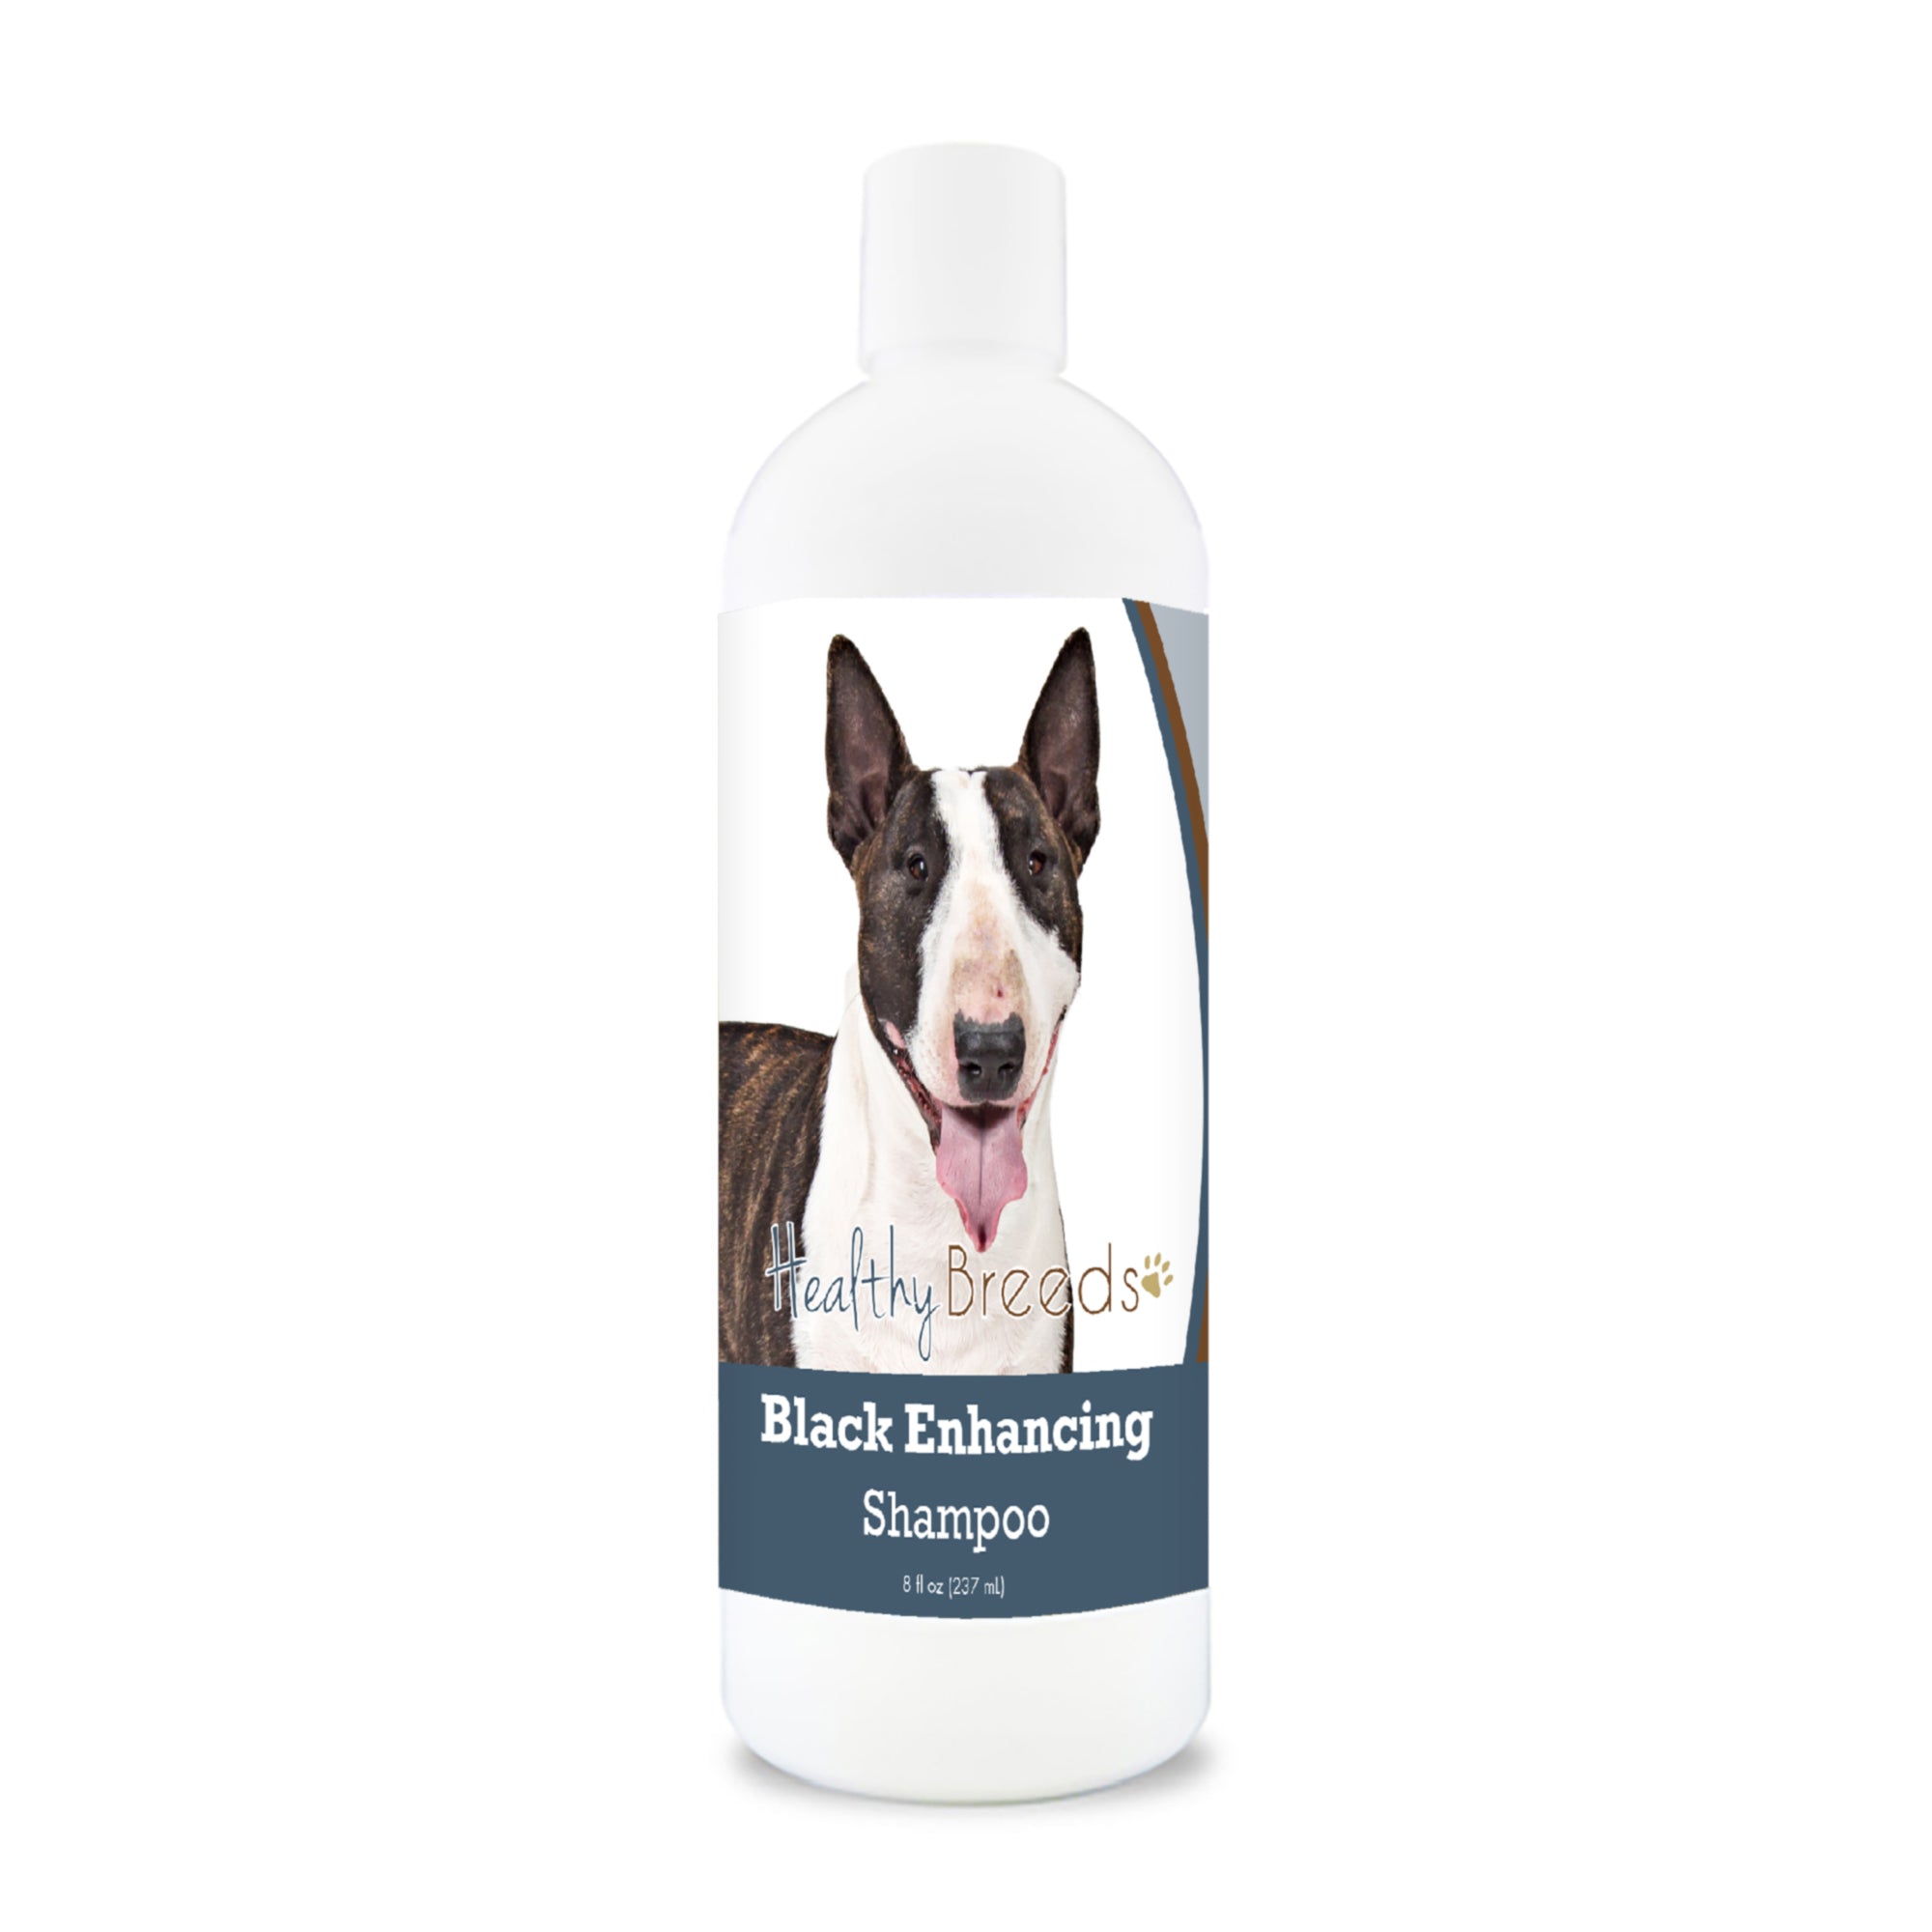 Miniature Bull Terrier Black Enhancing Shampoo 8 oz